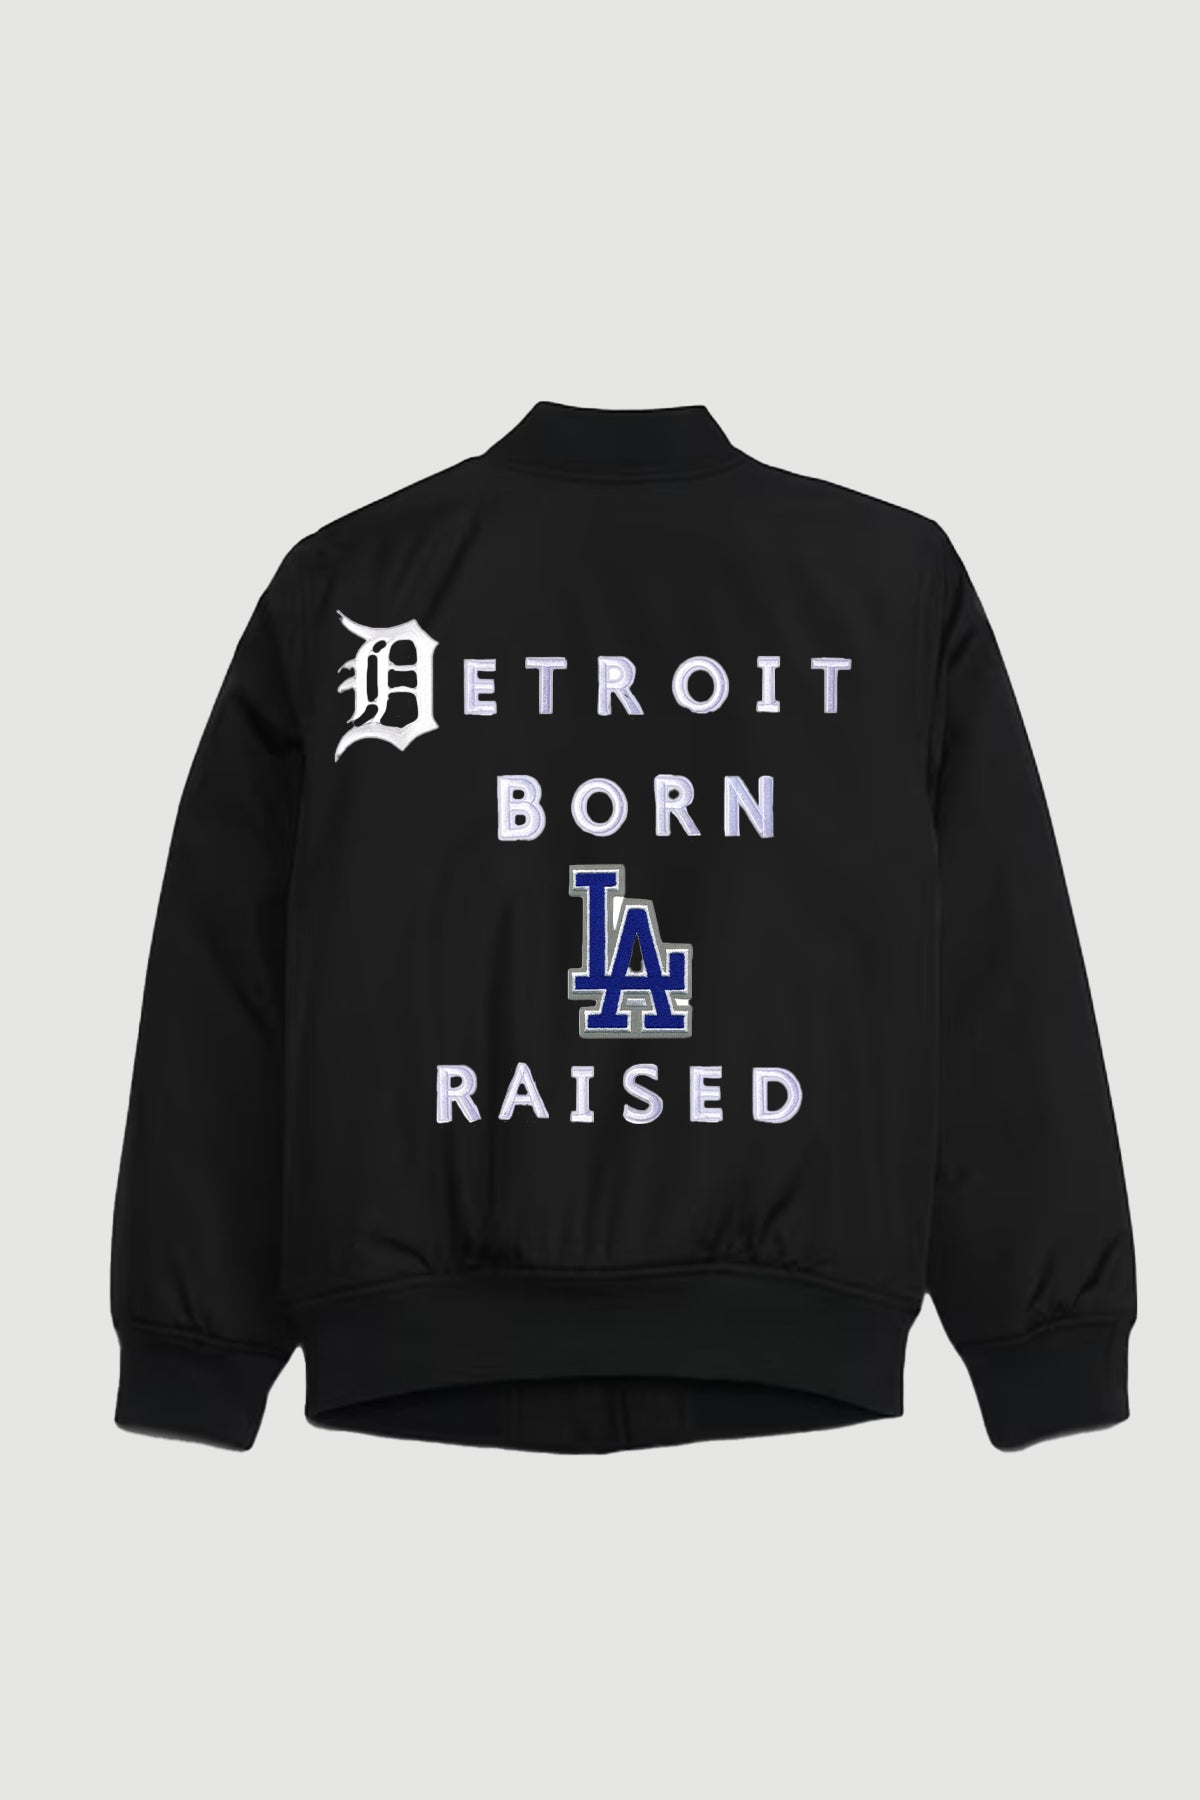 Upcycled Custom Order Detroit Born LA Raised Jacket for Kenneth